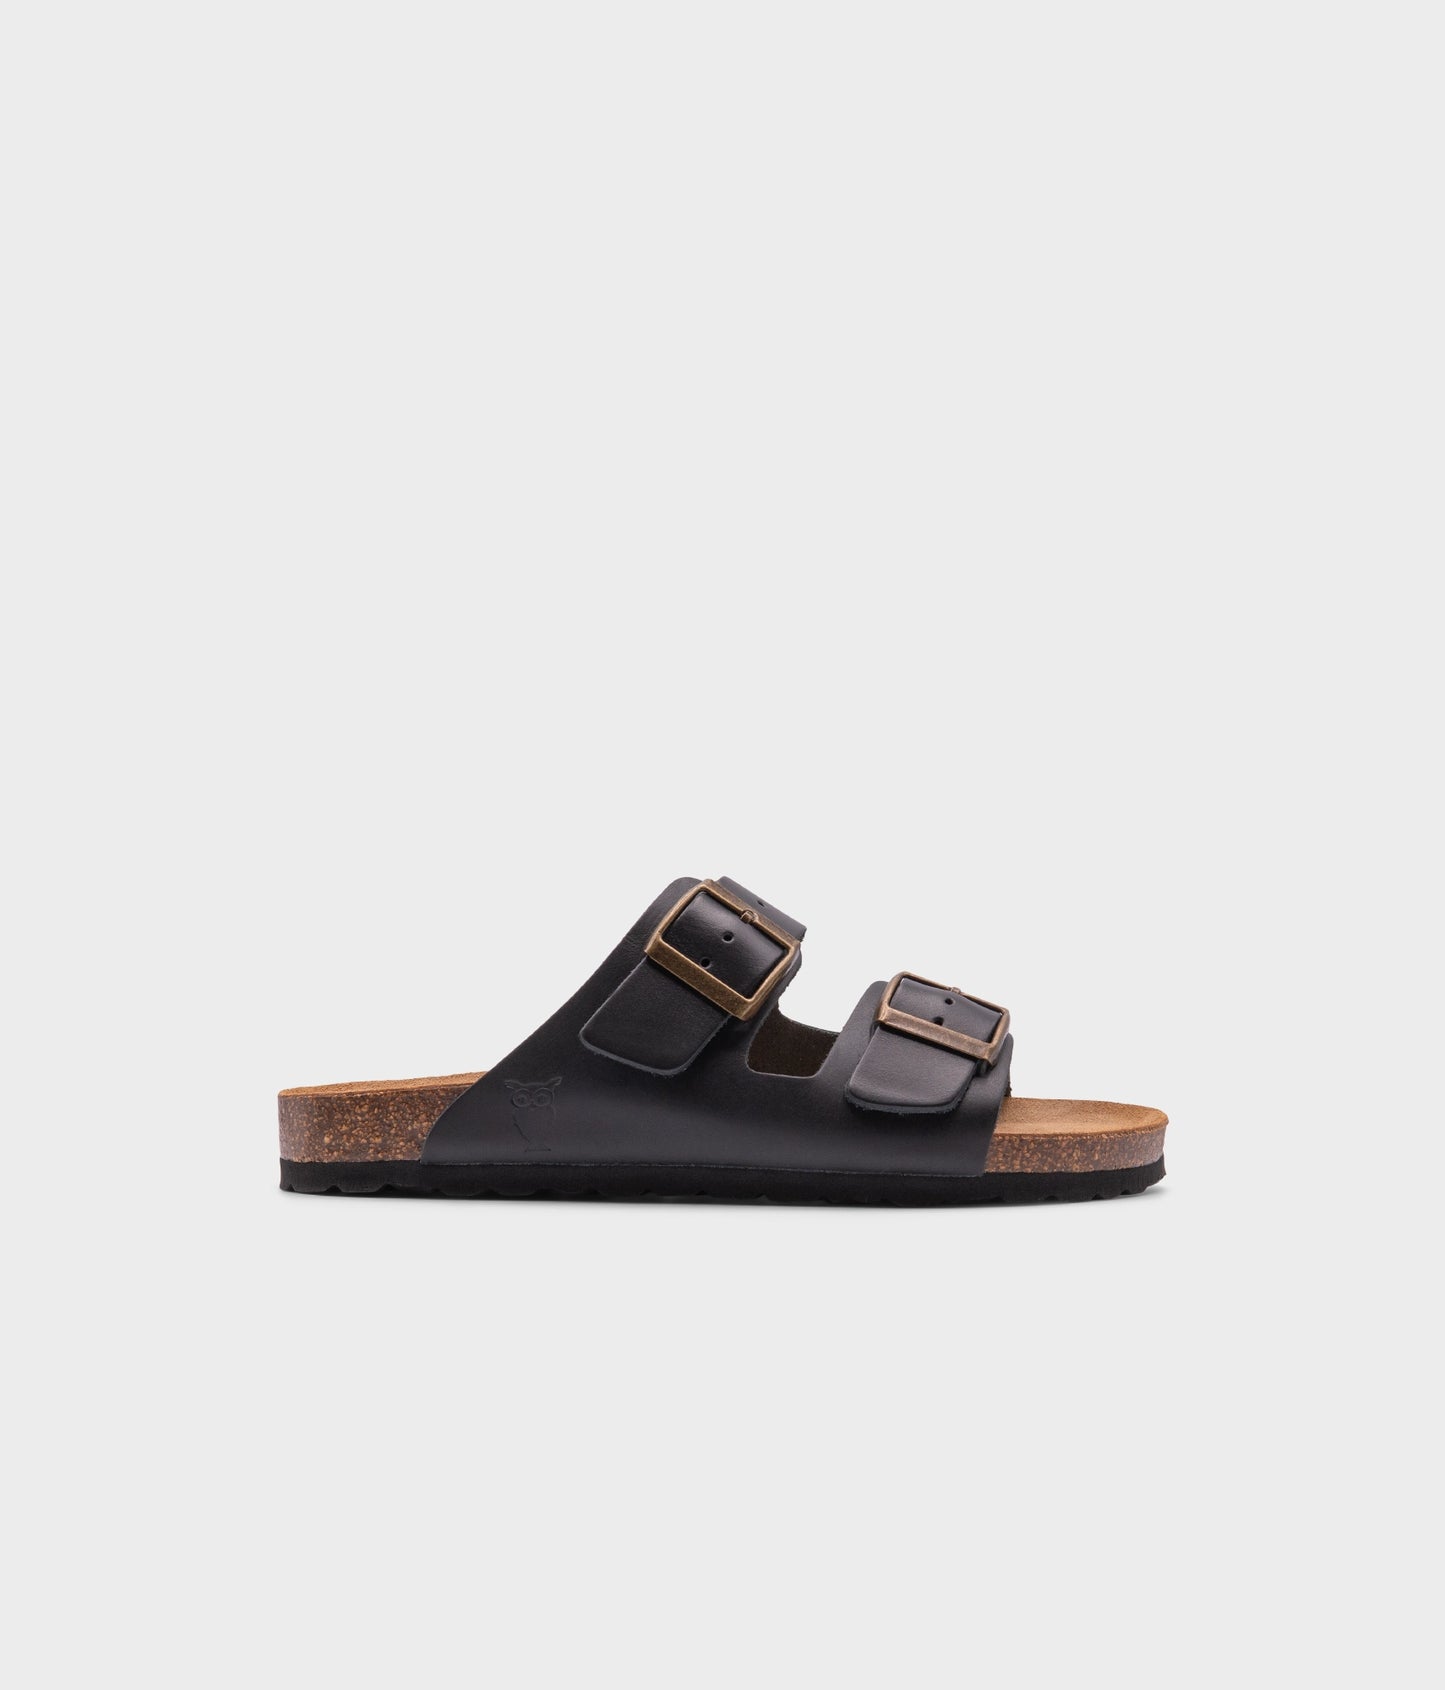 Costa classic cork sandals in black ember | Sandgrens